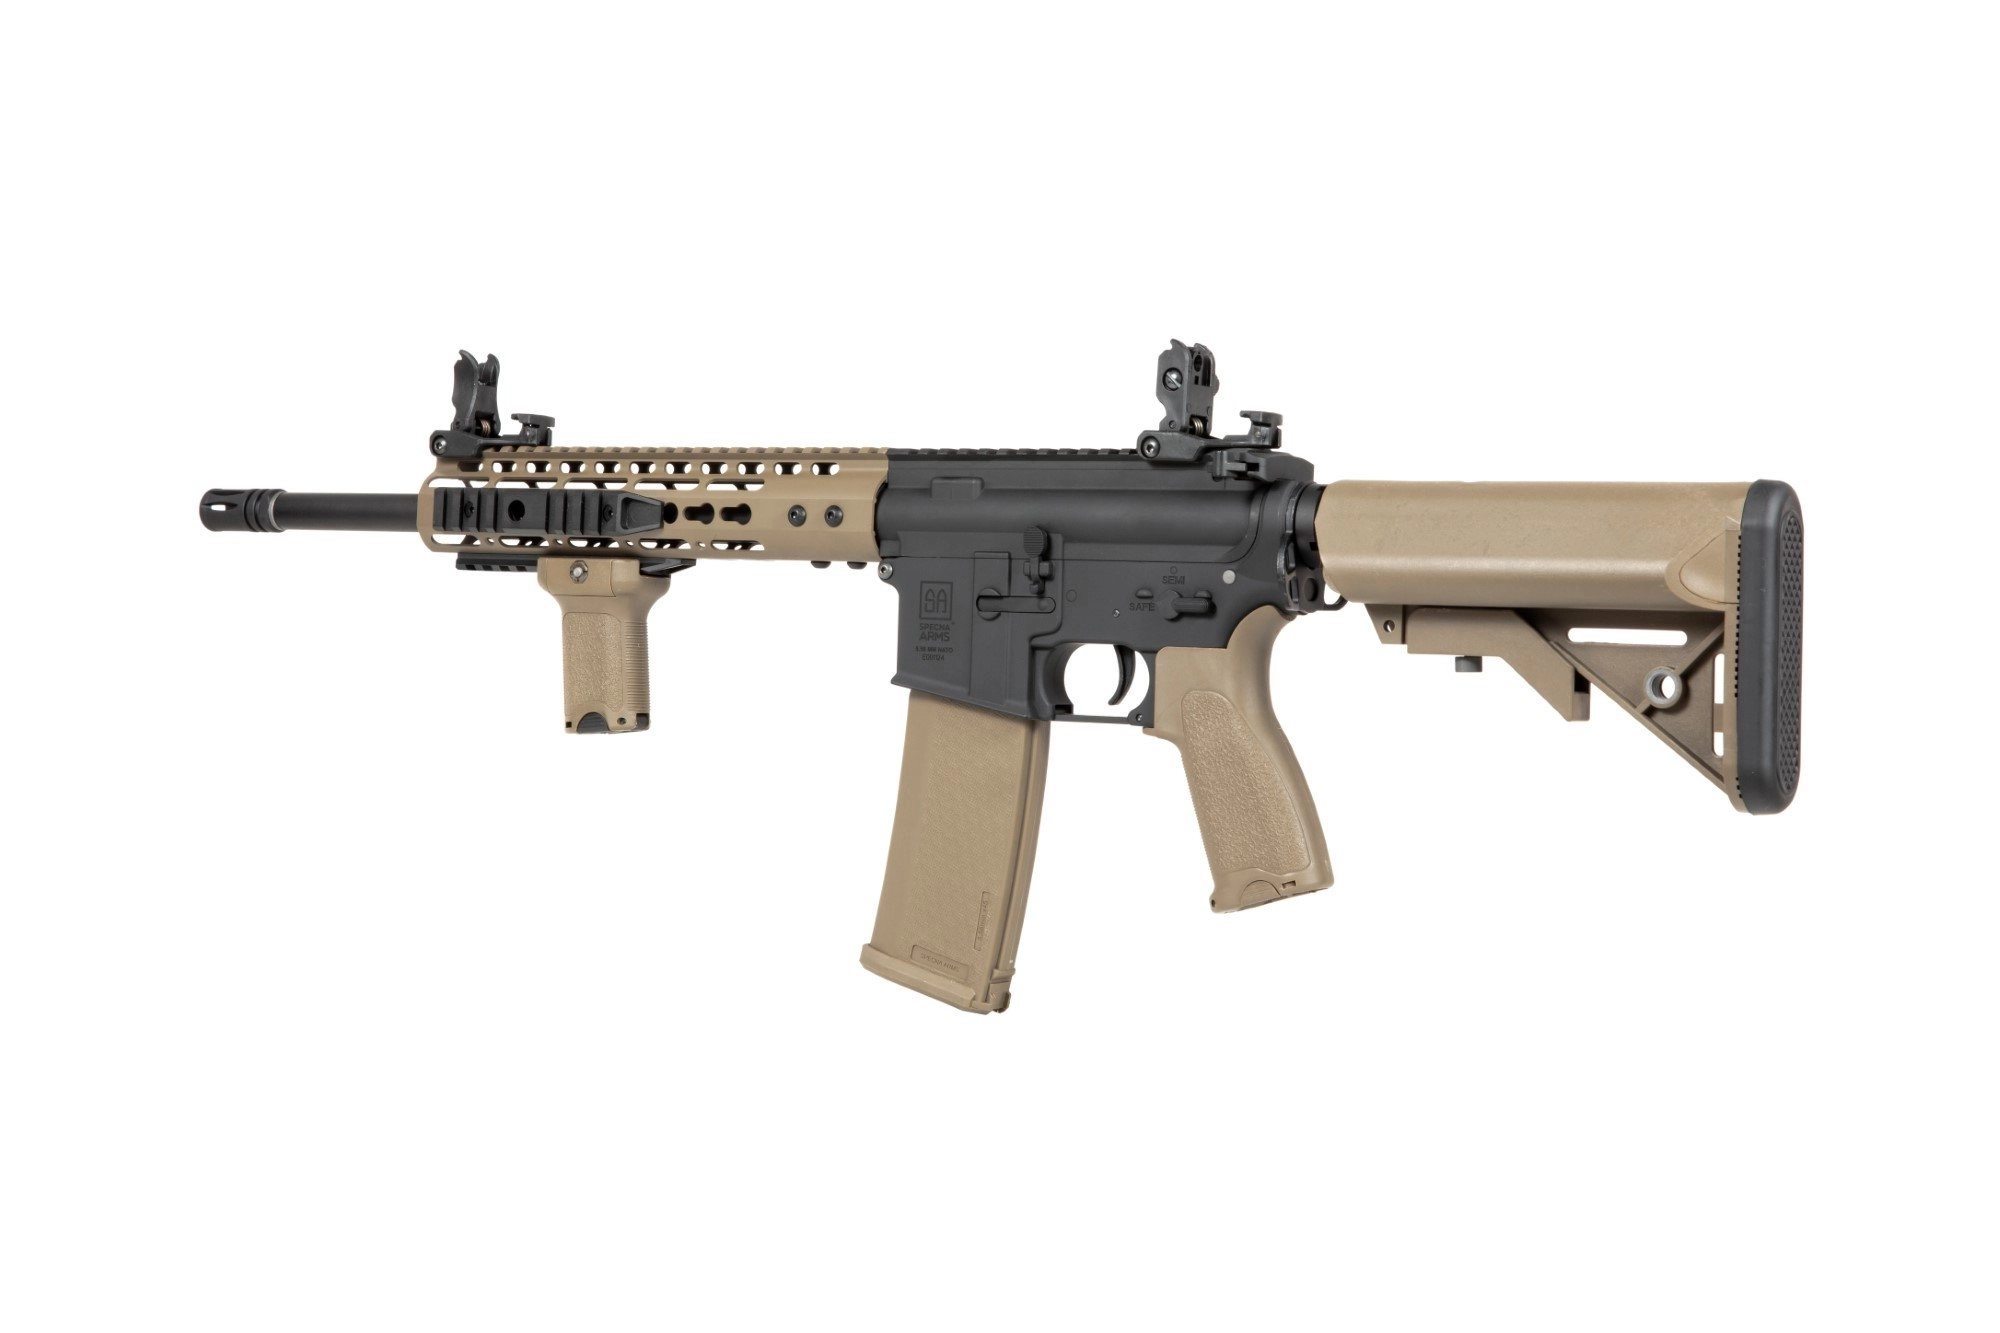 Specna Arms SA-E09 EDGE sähköase - musta/hiekka